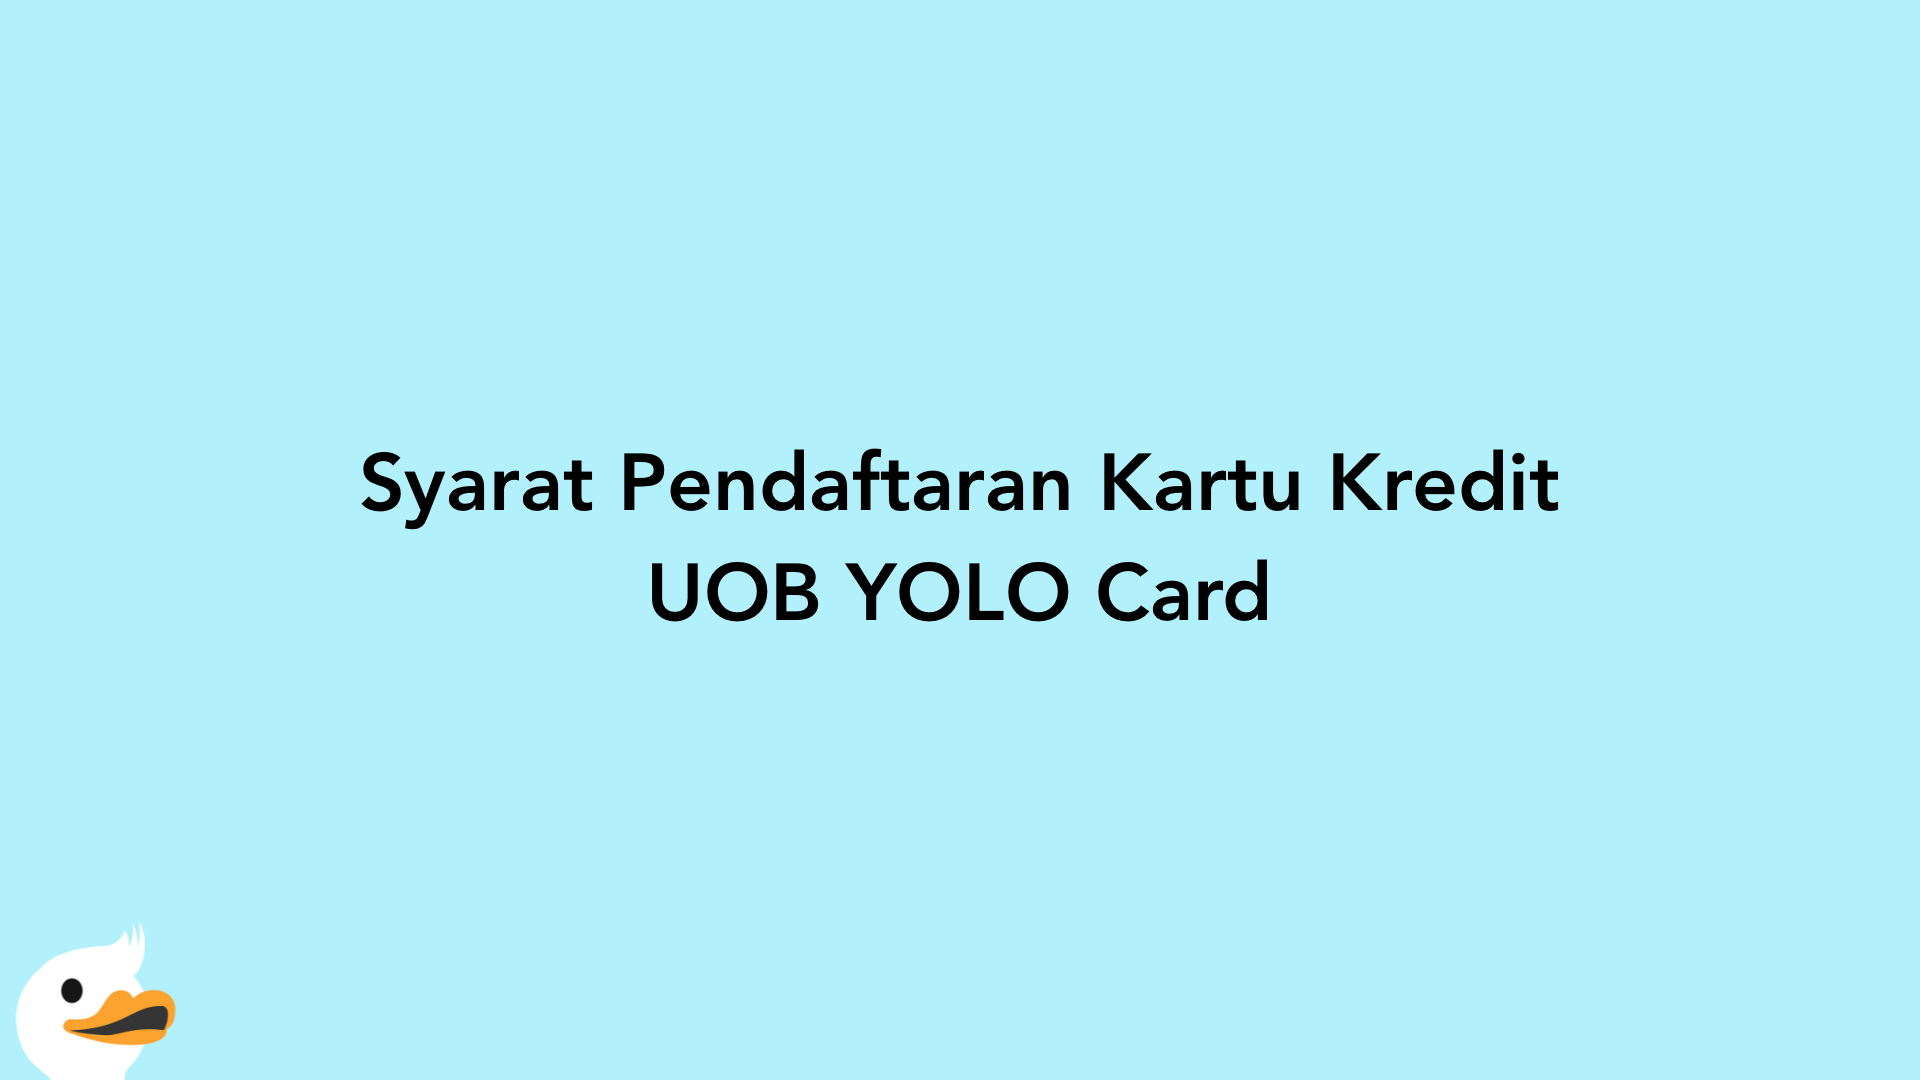 Syarat Pendaftaran Kartu Kredit UOB YOLO Card